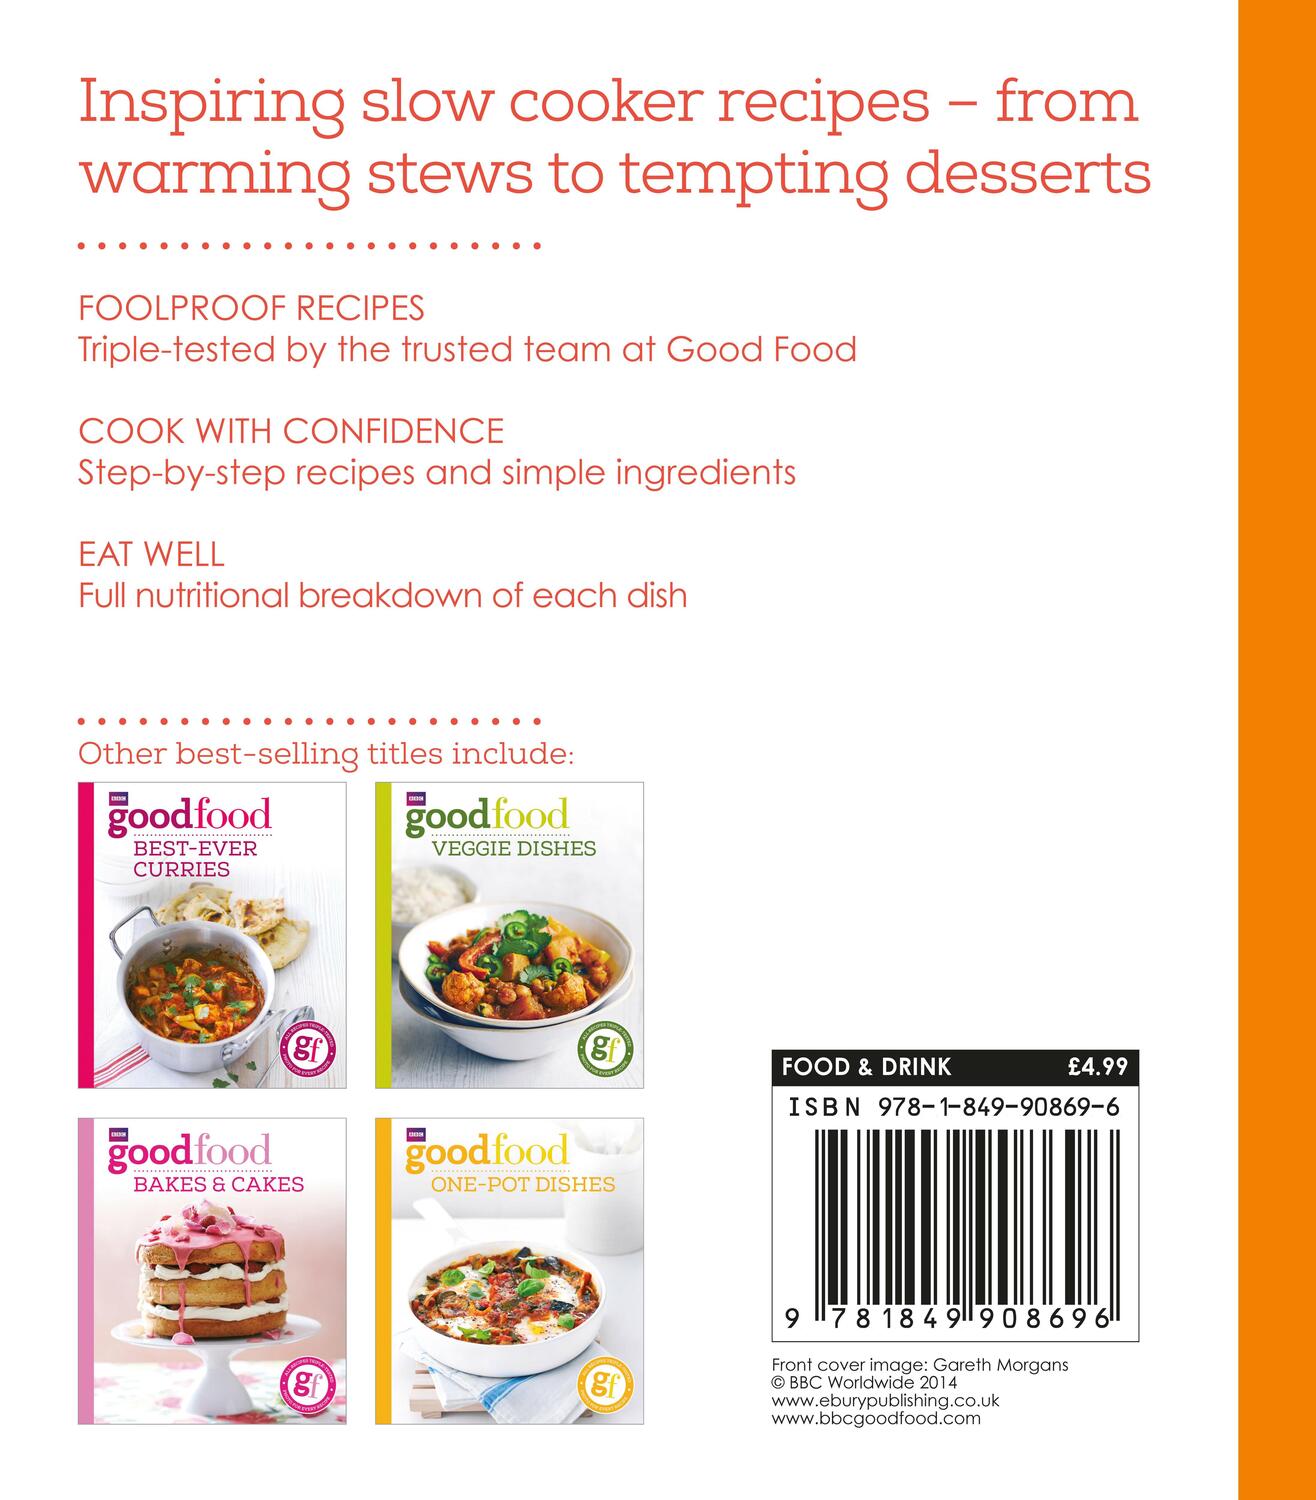 Rückseite: 9781849908696 | Good Food: Slow cooker favourites | Slow cooker favourites | Guides